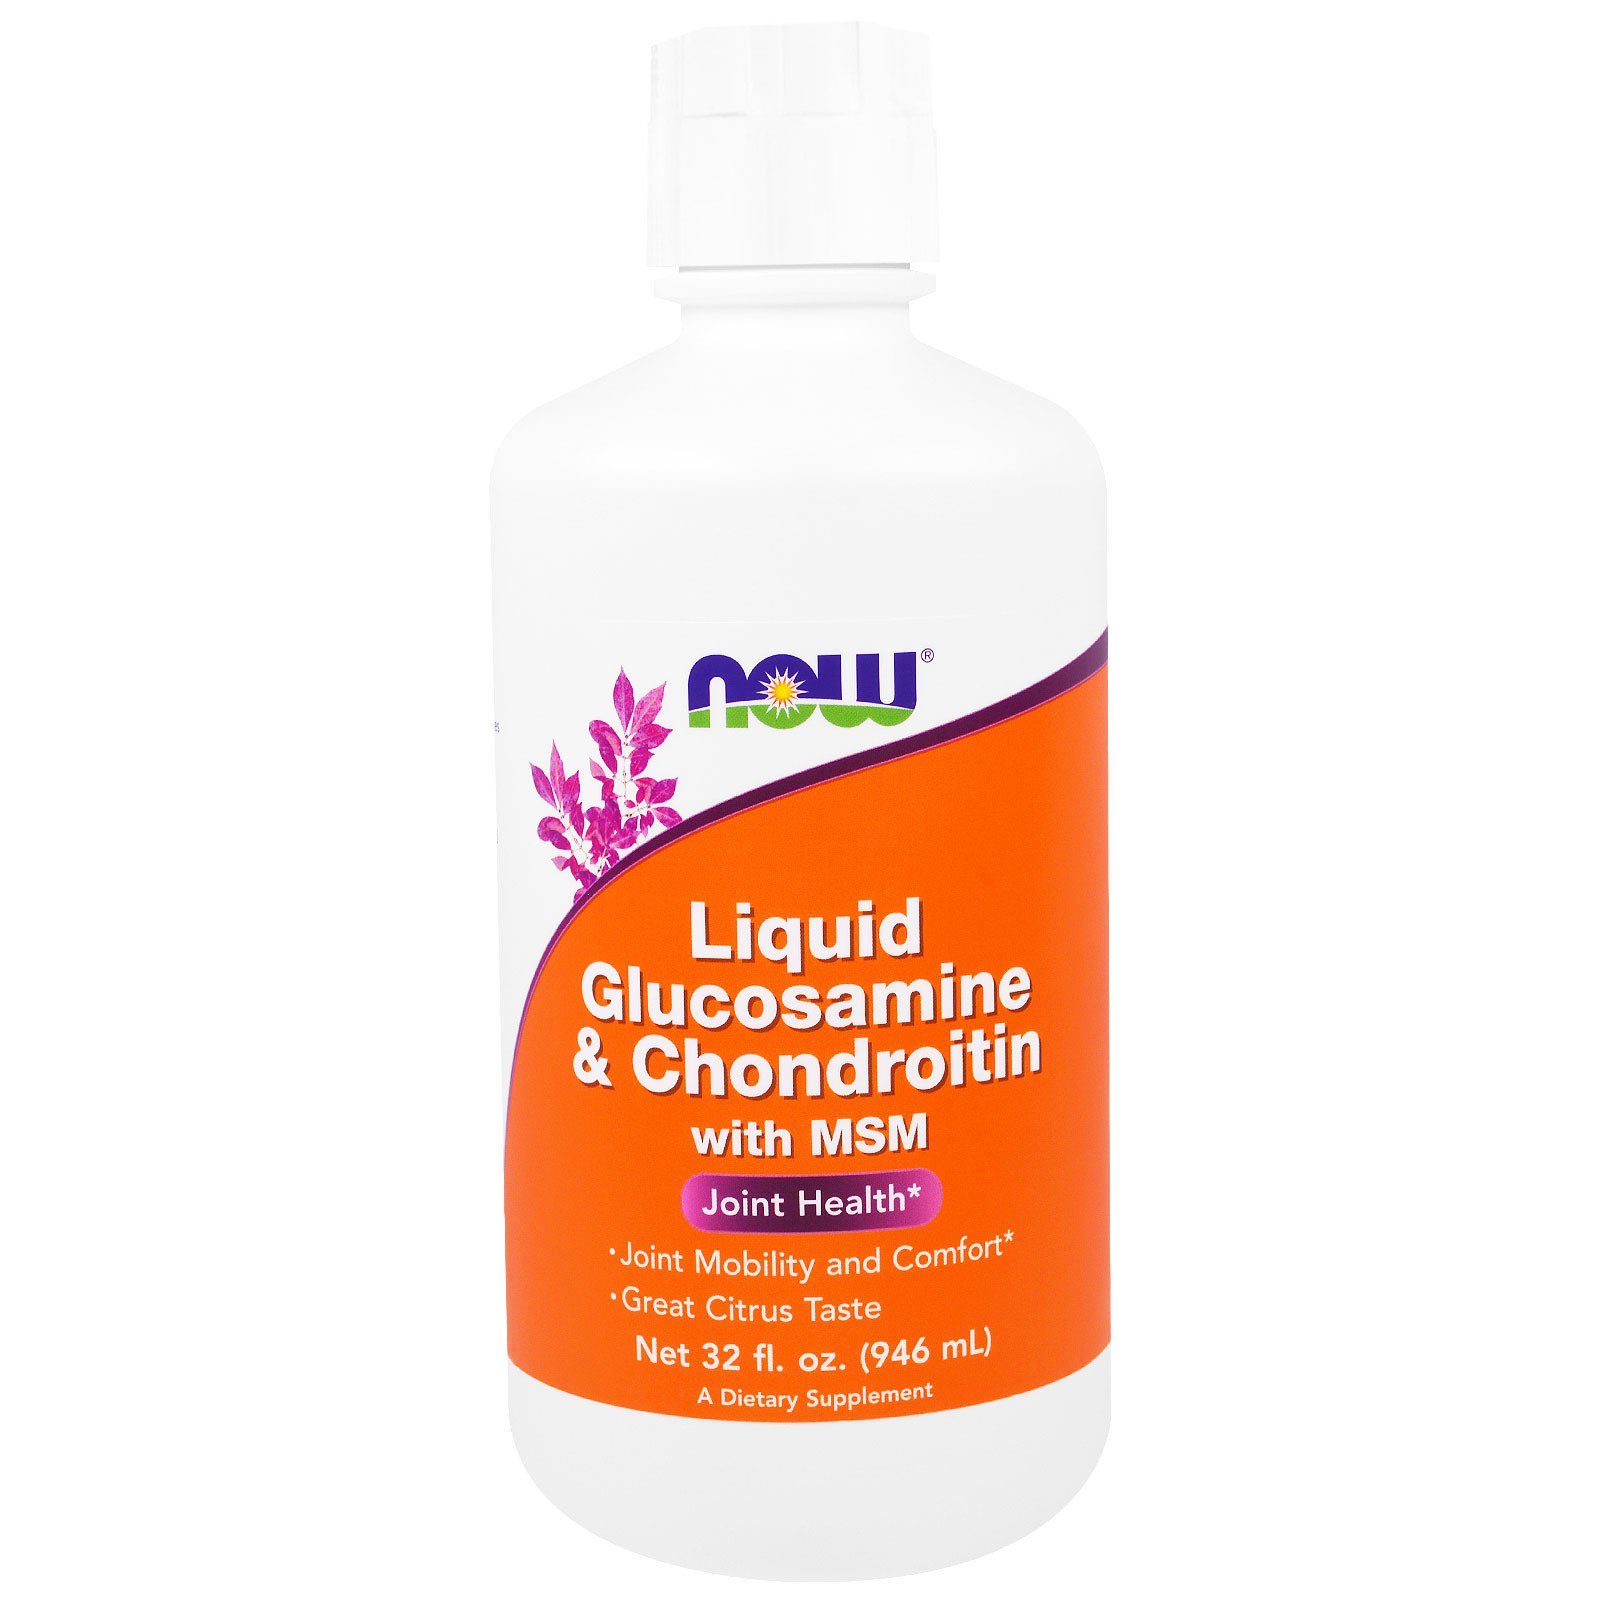 Glucosamine Chondroitin MSM, Жидкий Глюкозамин Хондроитин МСМ - 946 мл